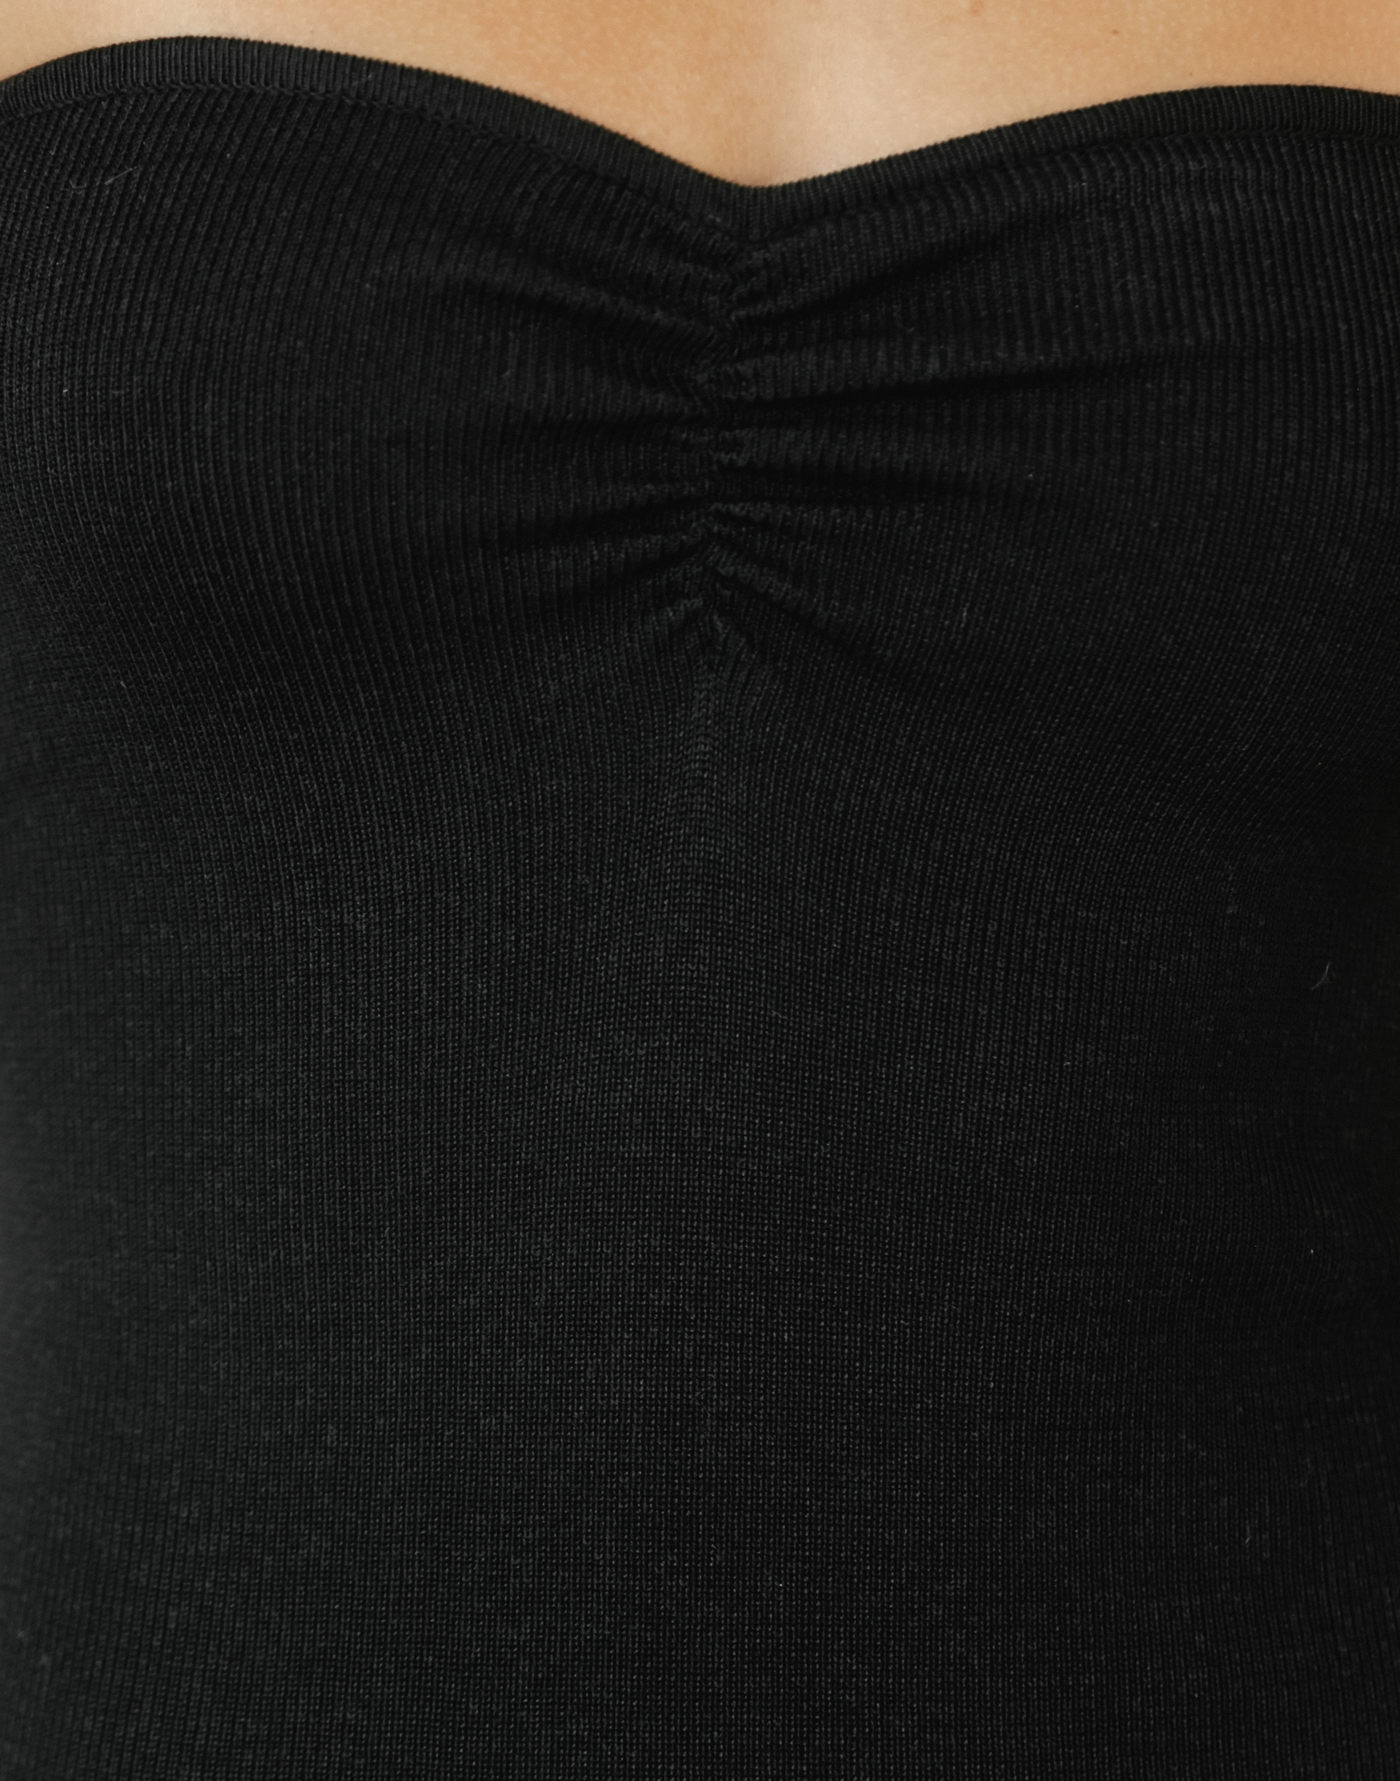 Westaway Midi Dress (Black) - Strapless Midi Dress - Women's Dress - Charcoal Clothing